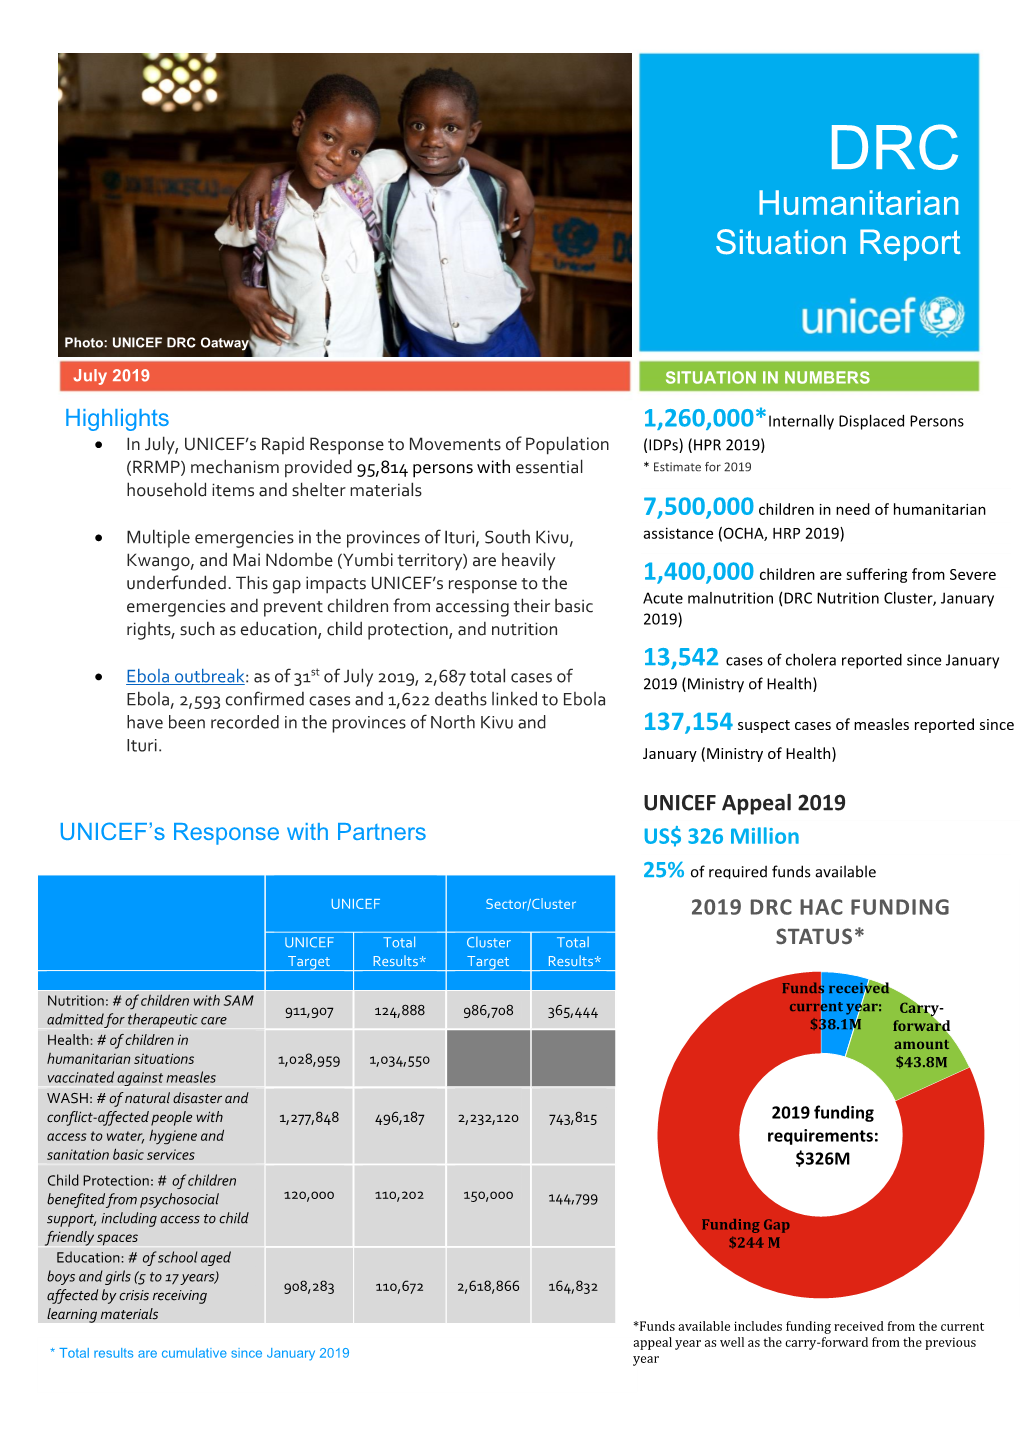 DRC Humanitarian Situation Report